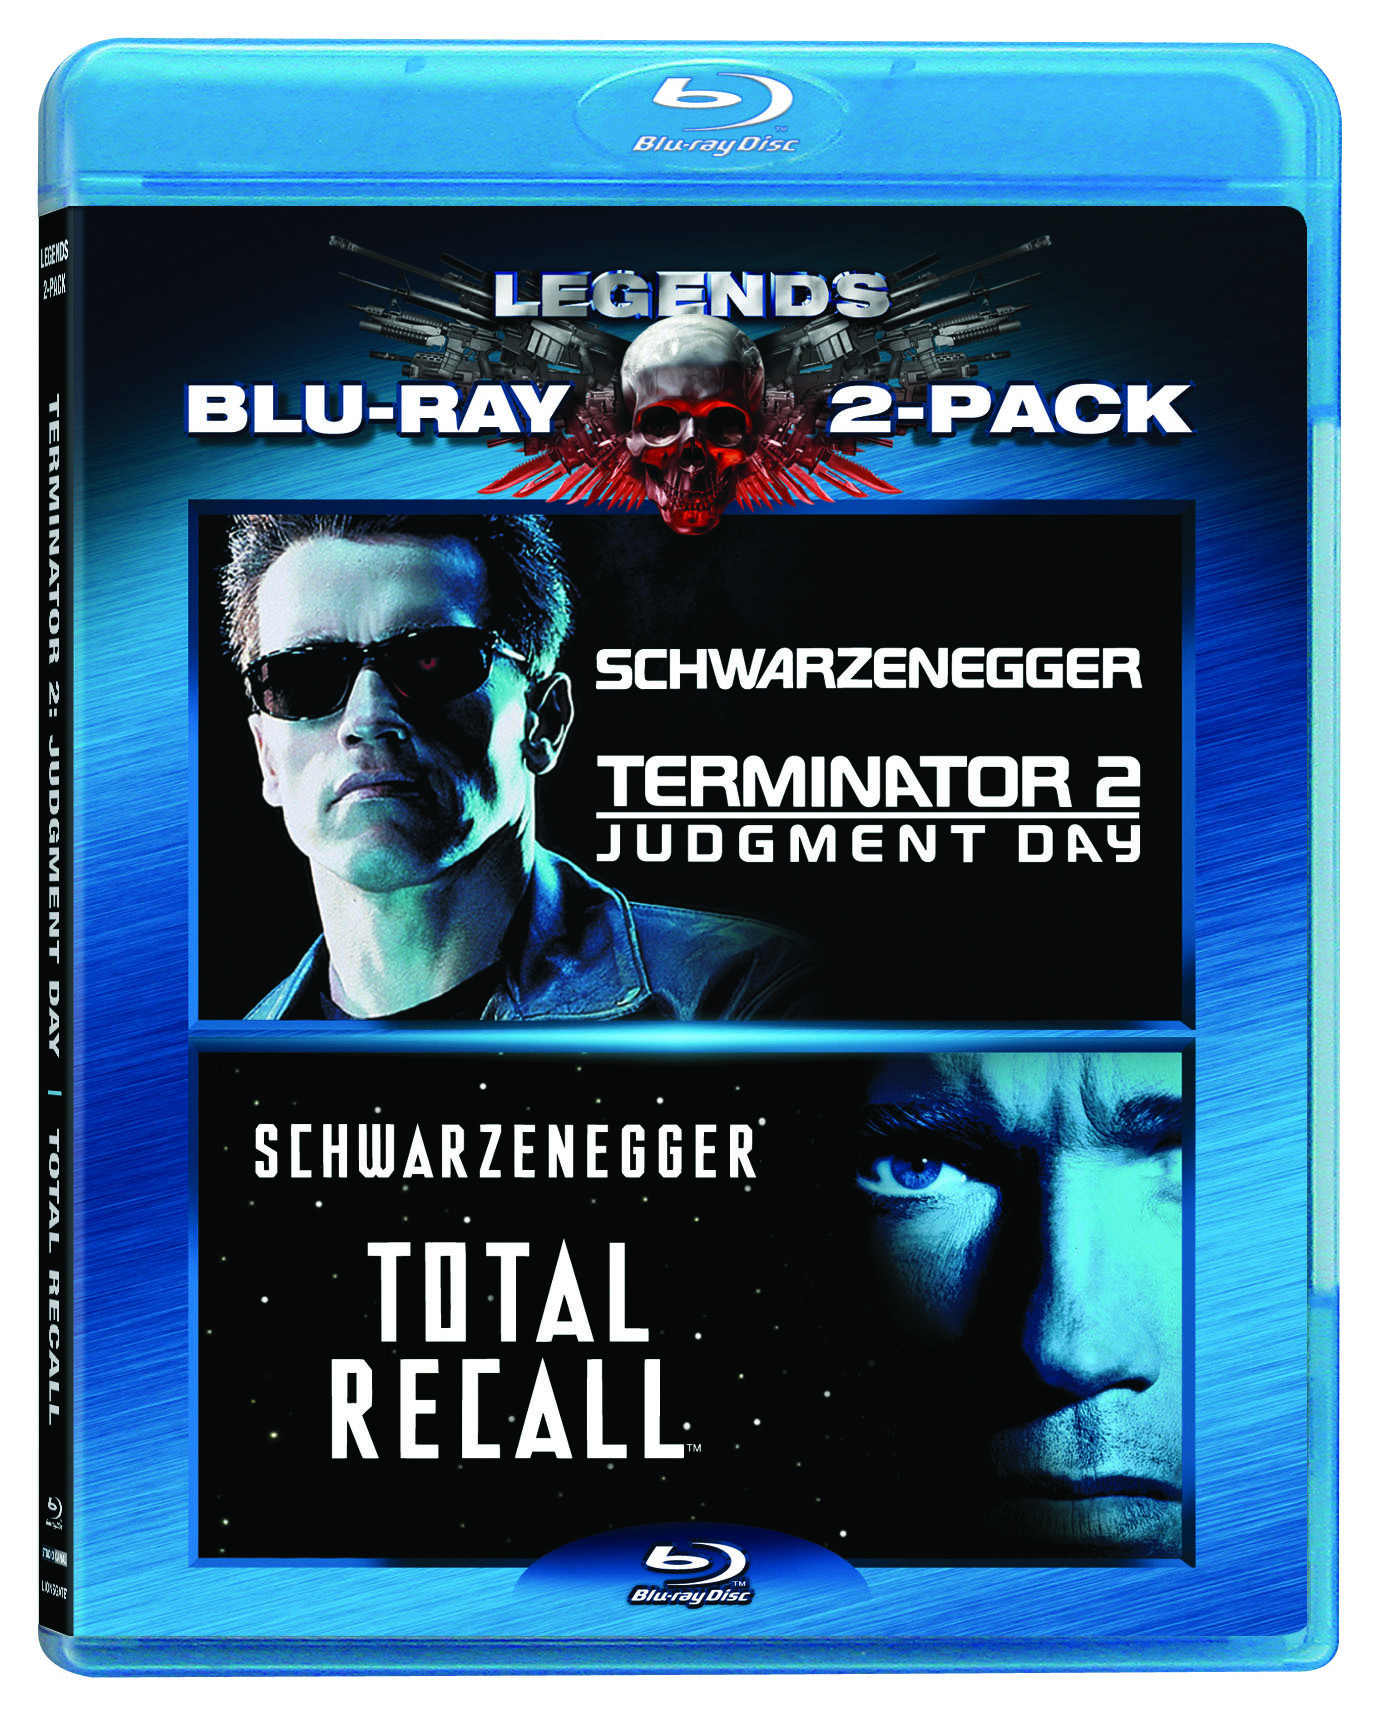 Terminator 2 Judgement Daytotal Recall Blu Ray